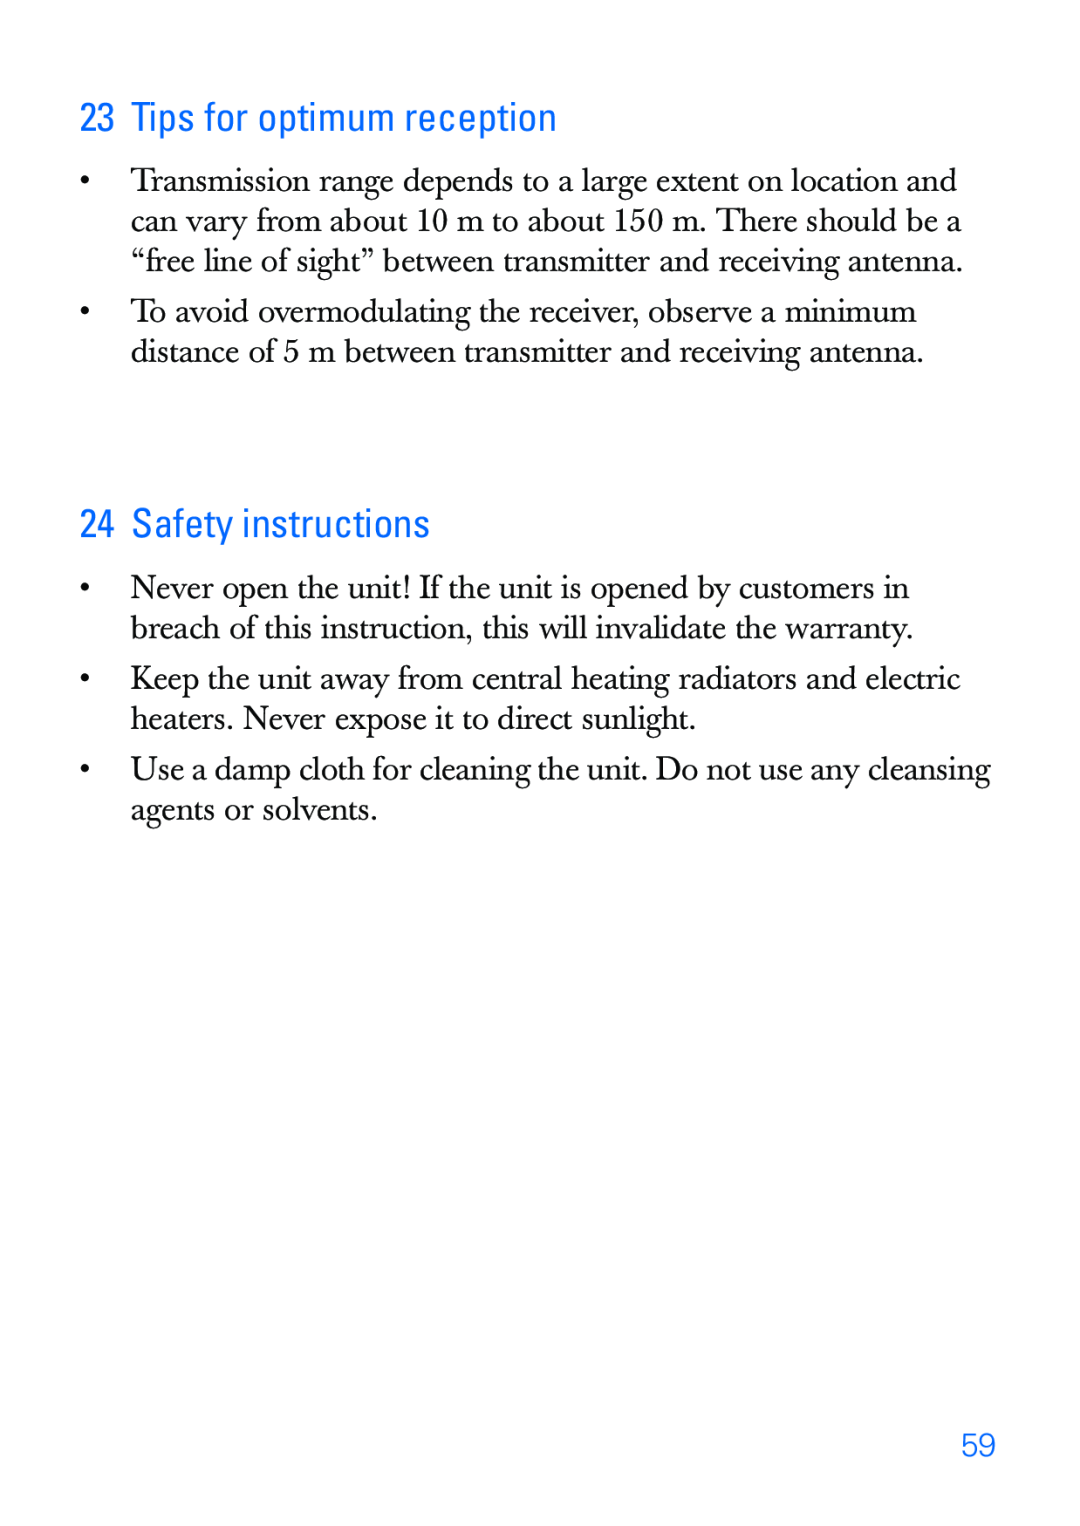 Sennheiser SKP 30 manual Tips for optimum reception, Safety instructions 